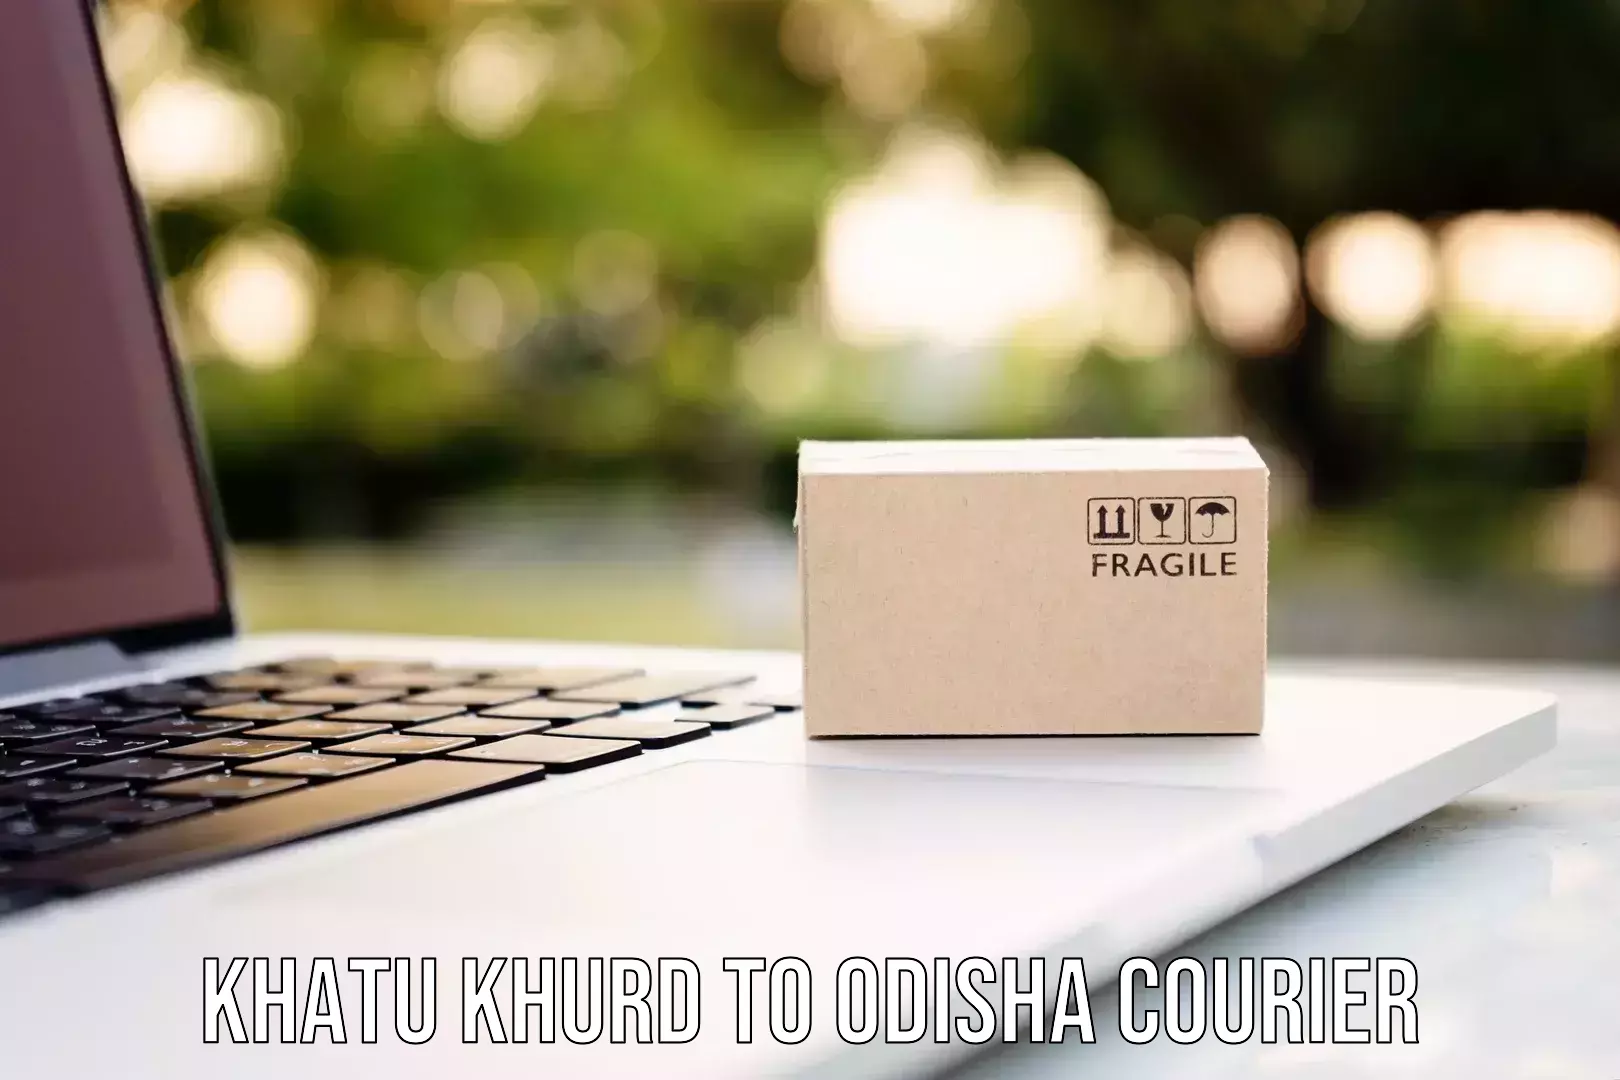 Modern courier technology Khatu Khurd to Nilagiri